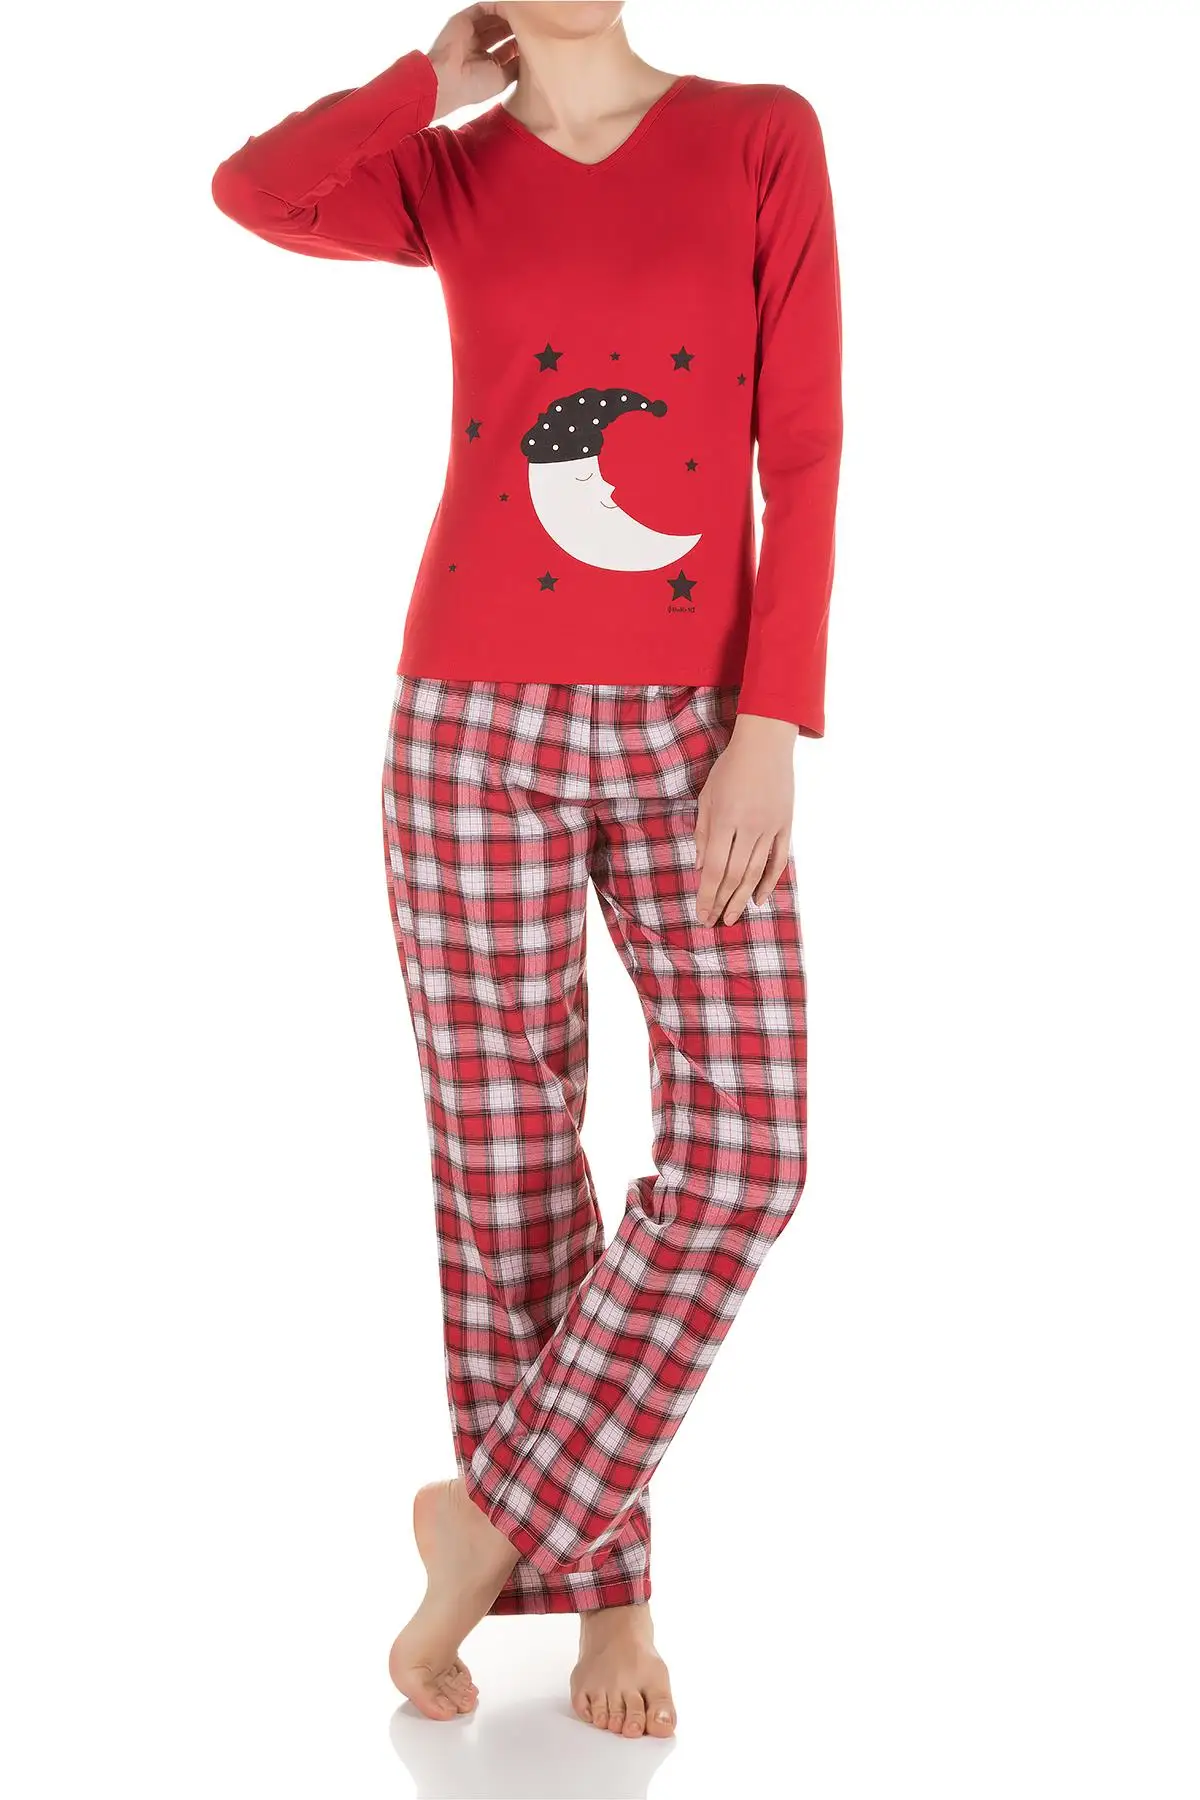 

2 Pieces Premium Set - Sleepwear for Women Nightgowns Pyjamas Sleepshirts Homewear Nightdress Sleep Night Wear Sleeping